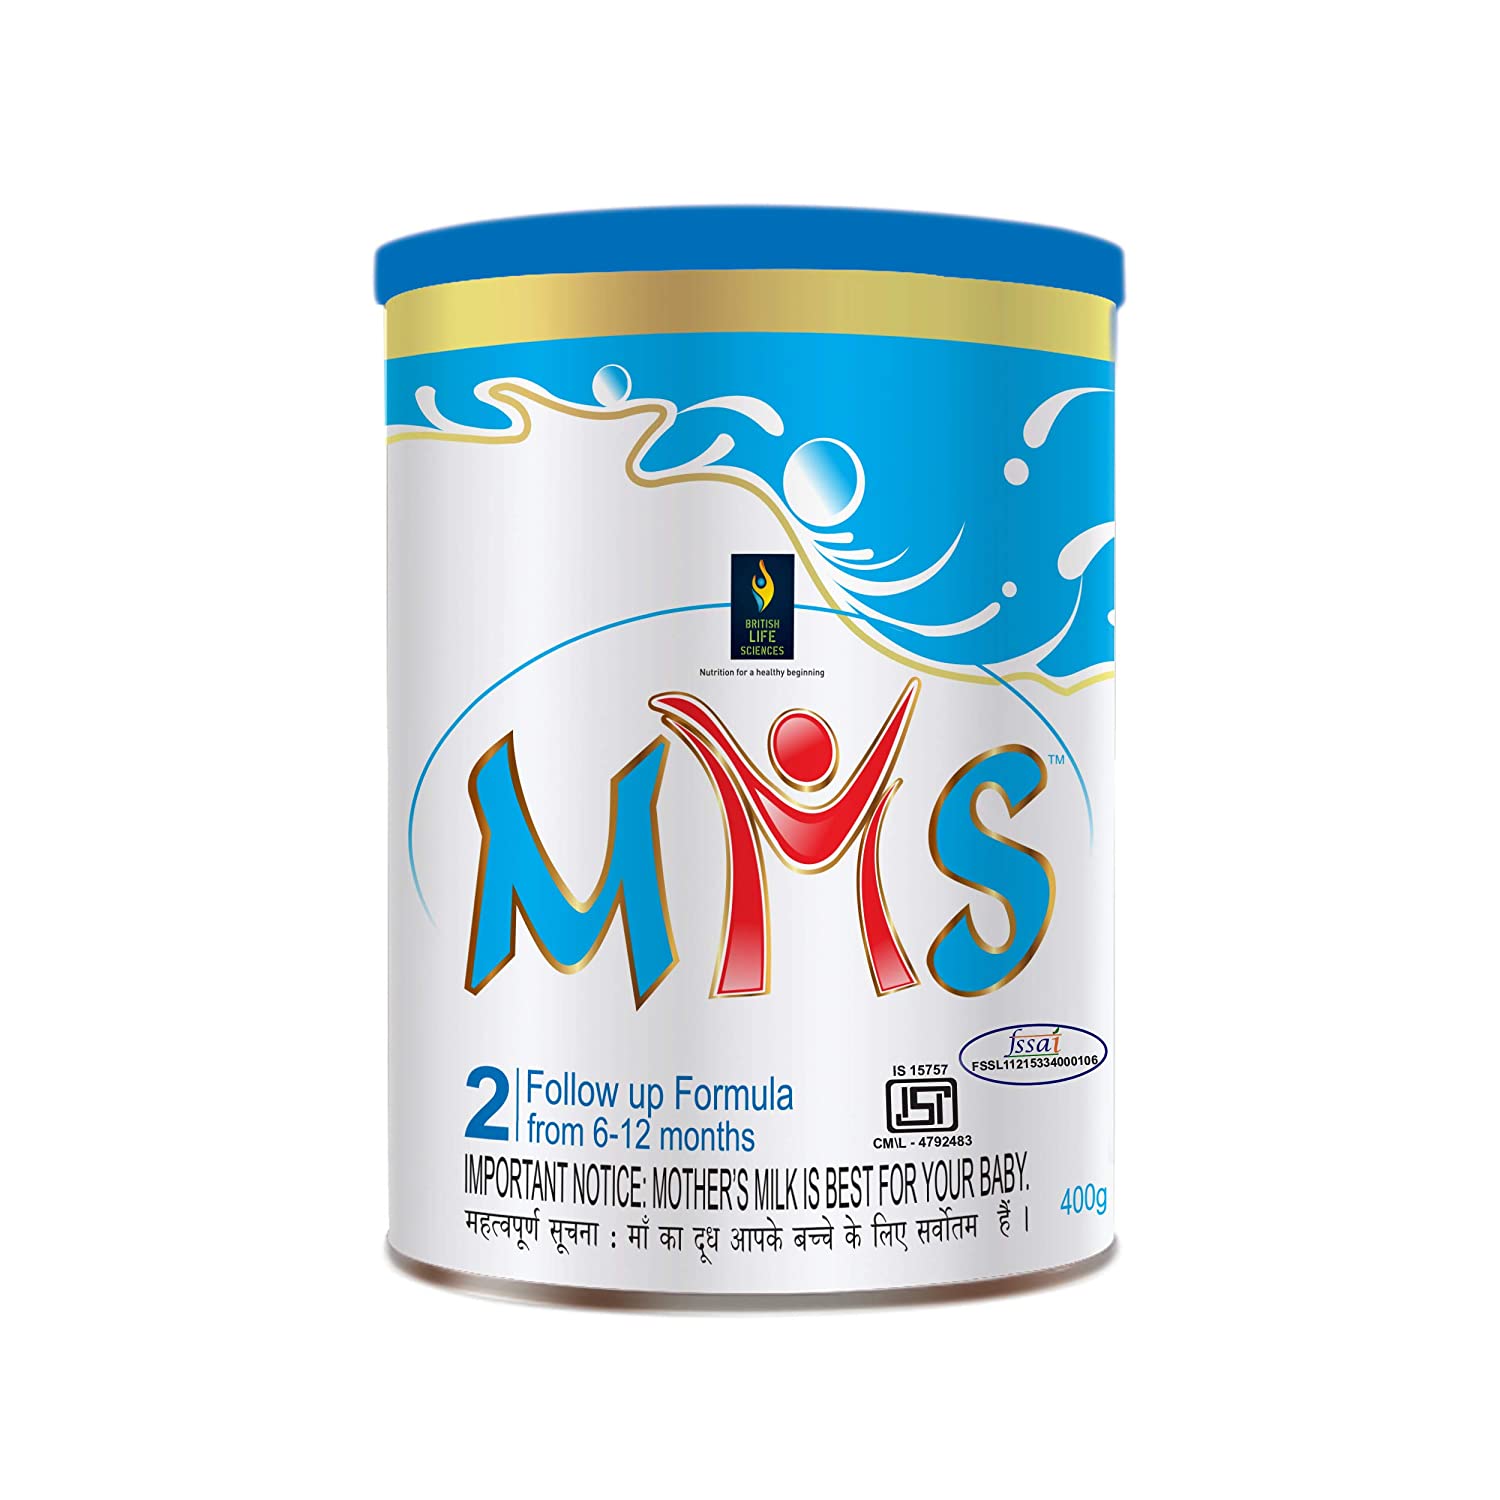 MMS Follow Up Formula Milk